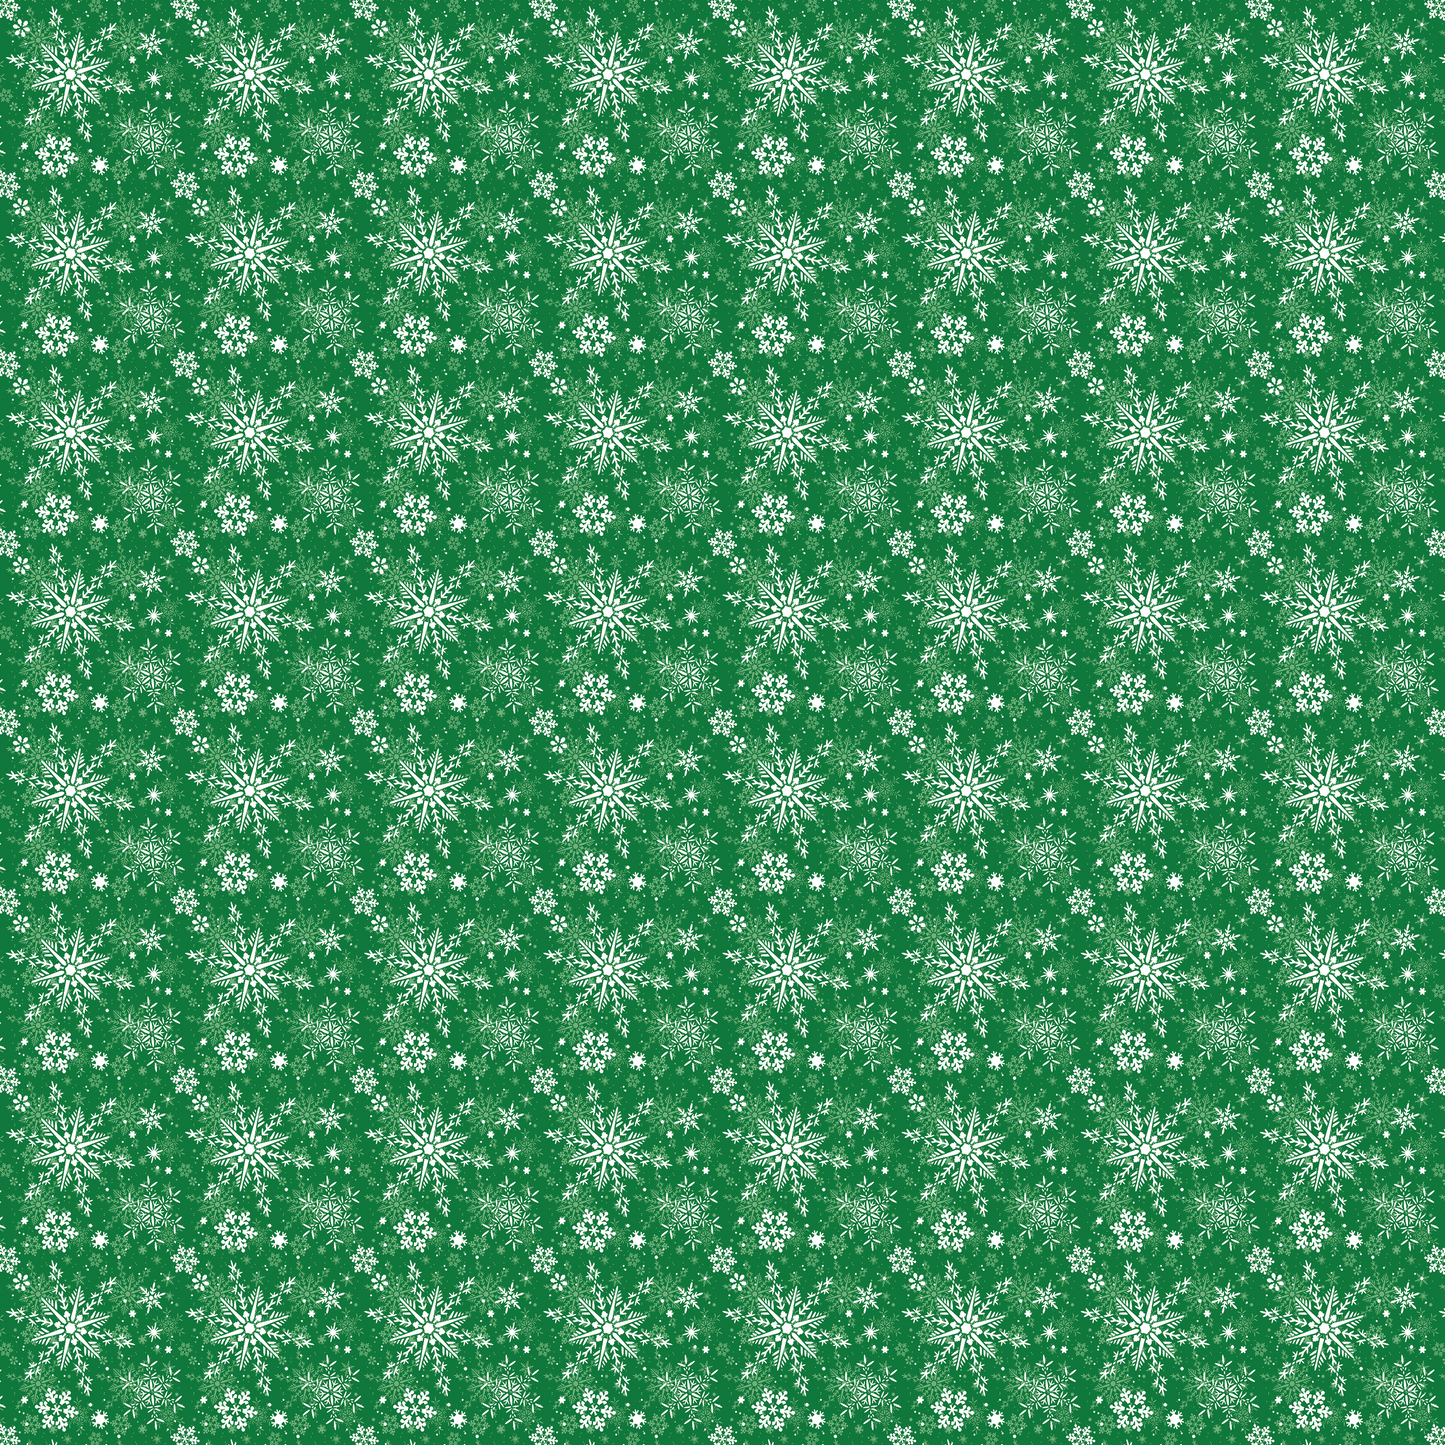 White Snowflakes on a Green Background 011